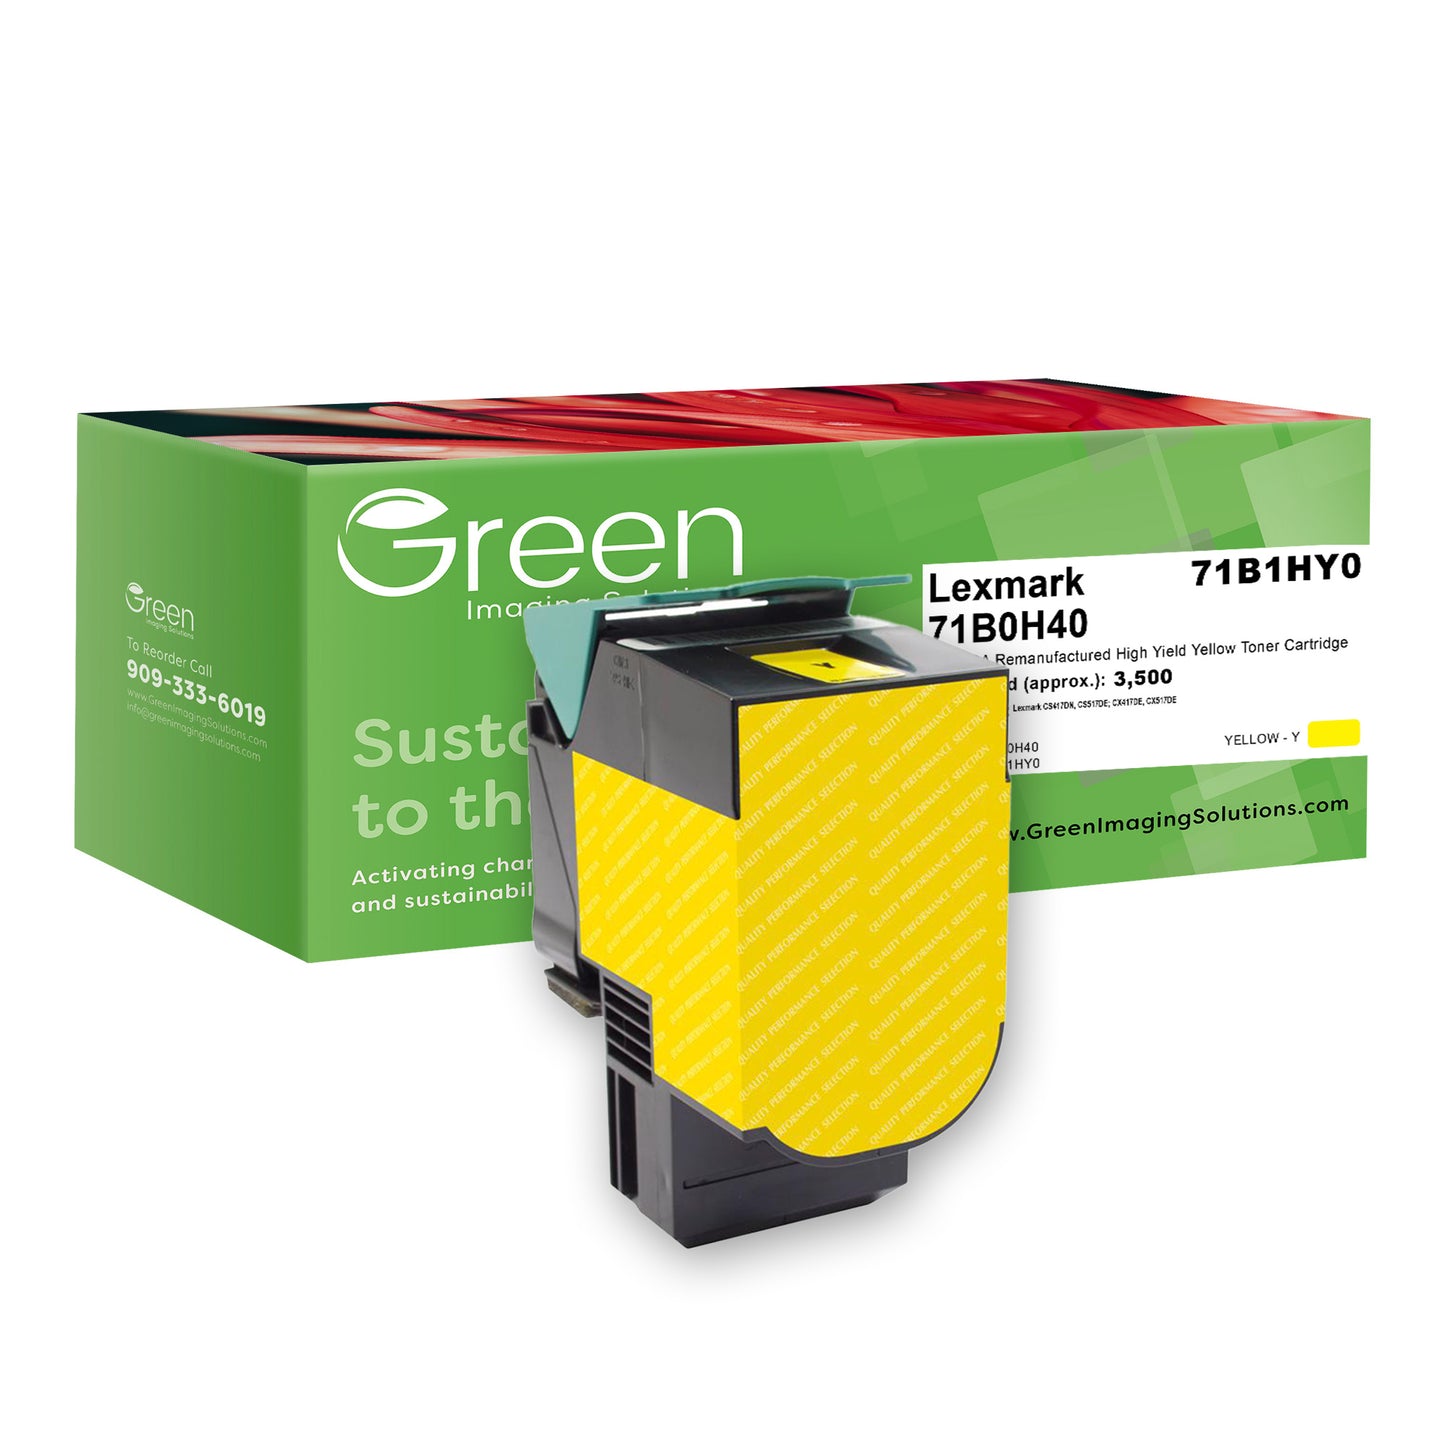 Green Imaging Solutions USA Remanufactured High Yield Yellow Toner Cartridge for Lexmark CS417/CS517